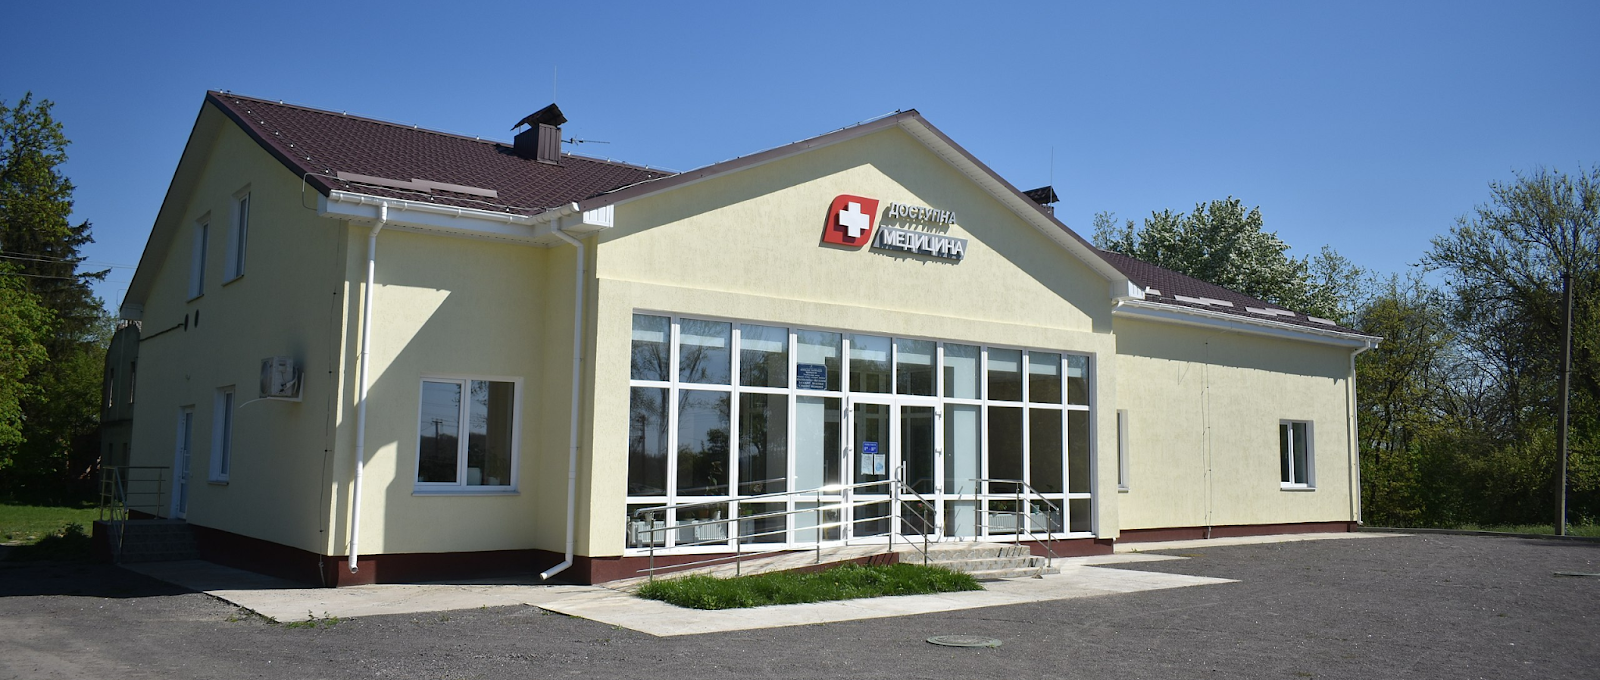 Primary Health Care Centre in the Krasnosilka Community